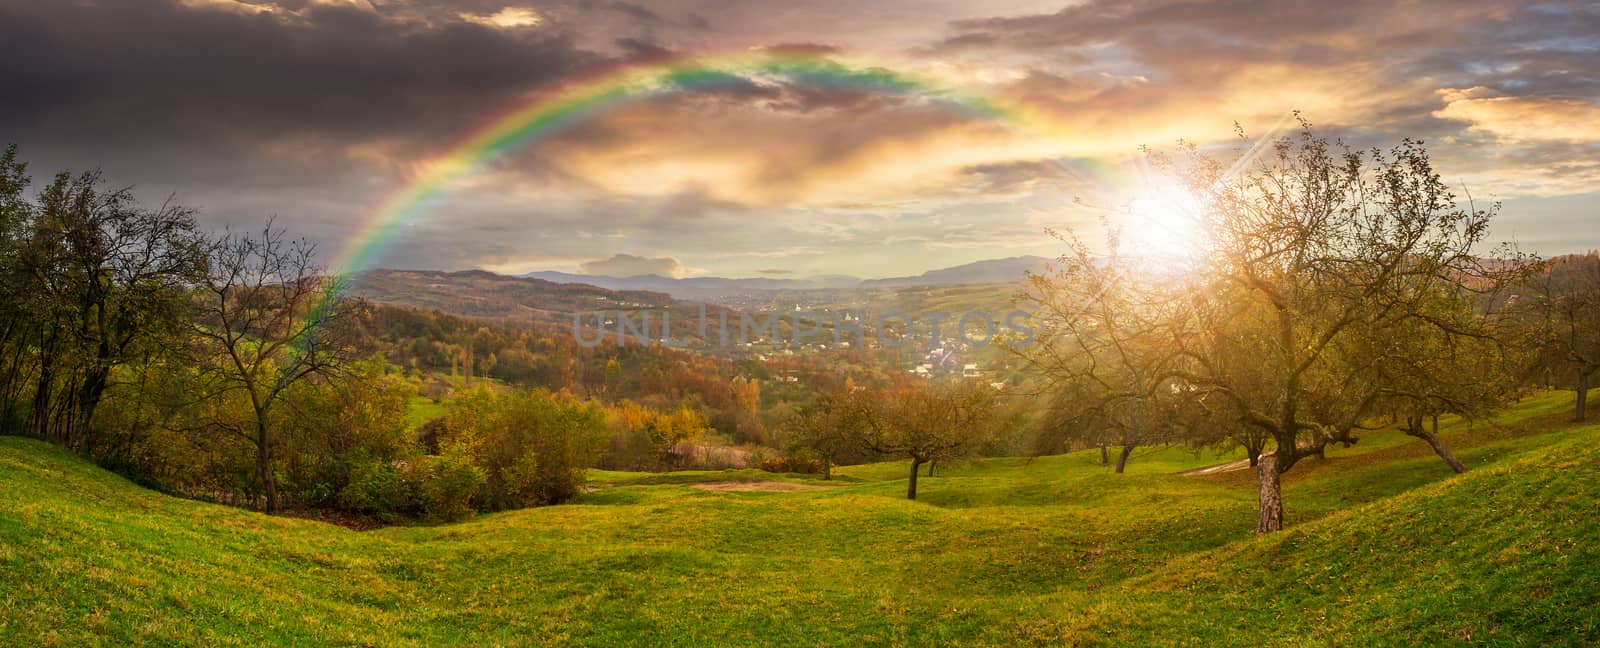 Green hillside of an apple orchard near the mountain village in sunset light with rainbow